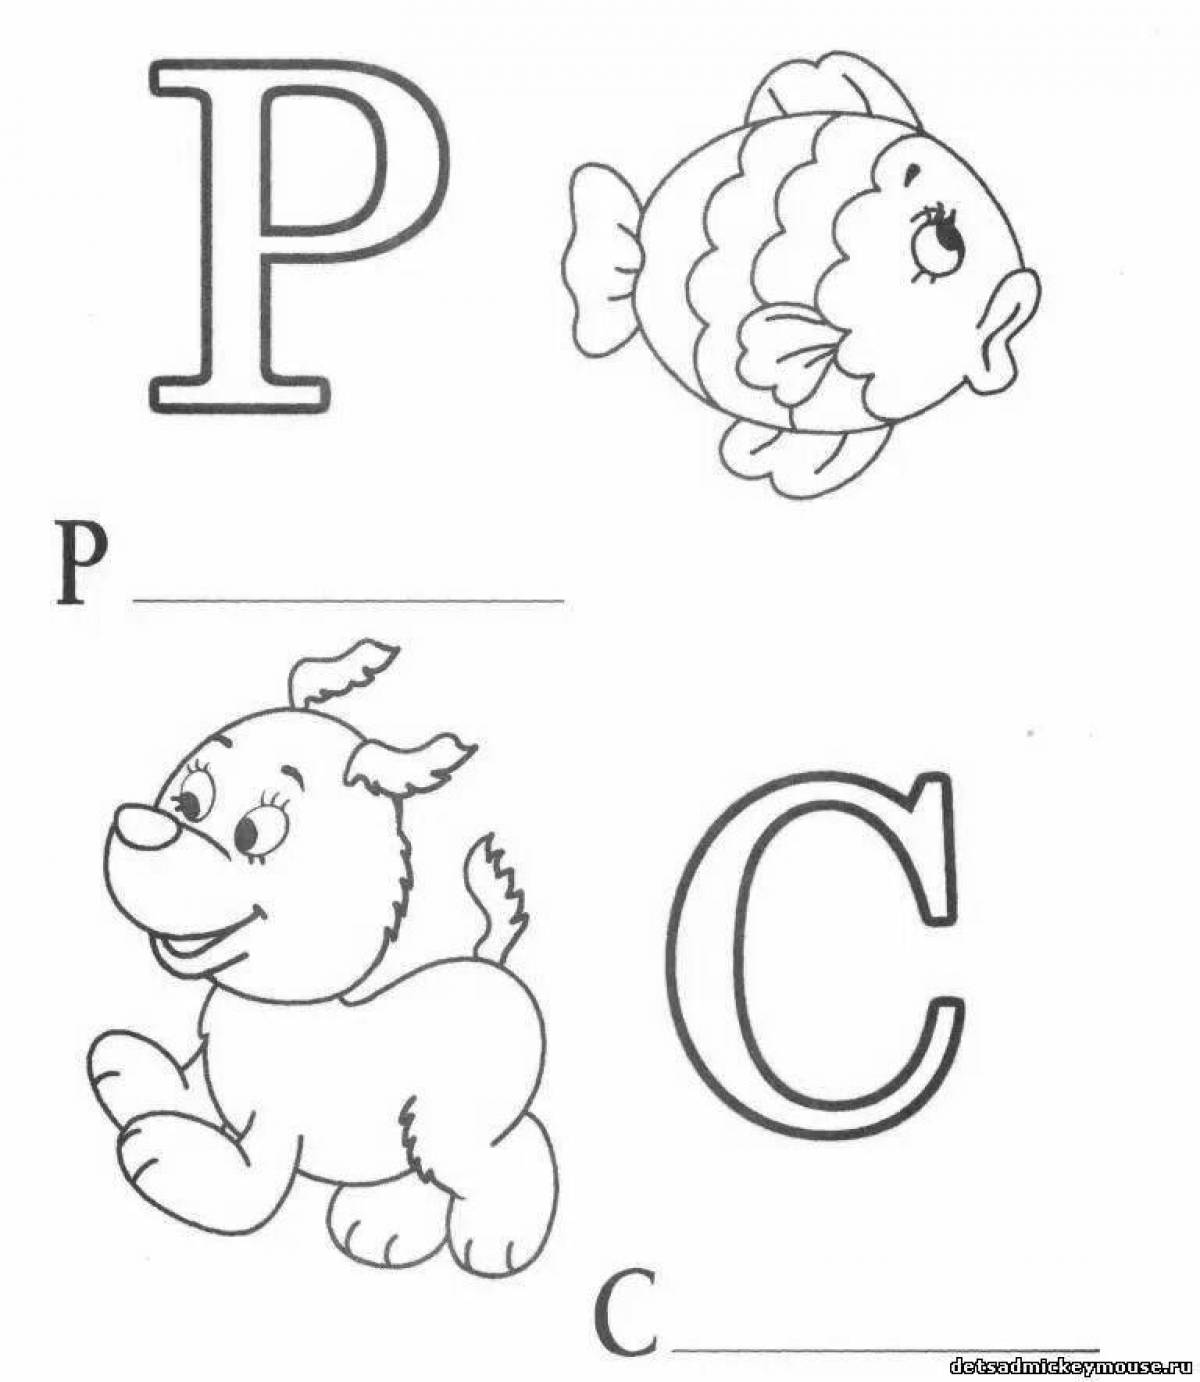 Fun alphabet coloring book for kids